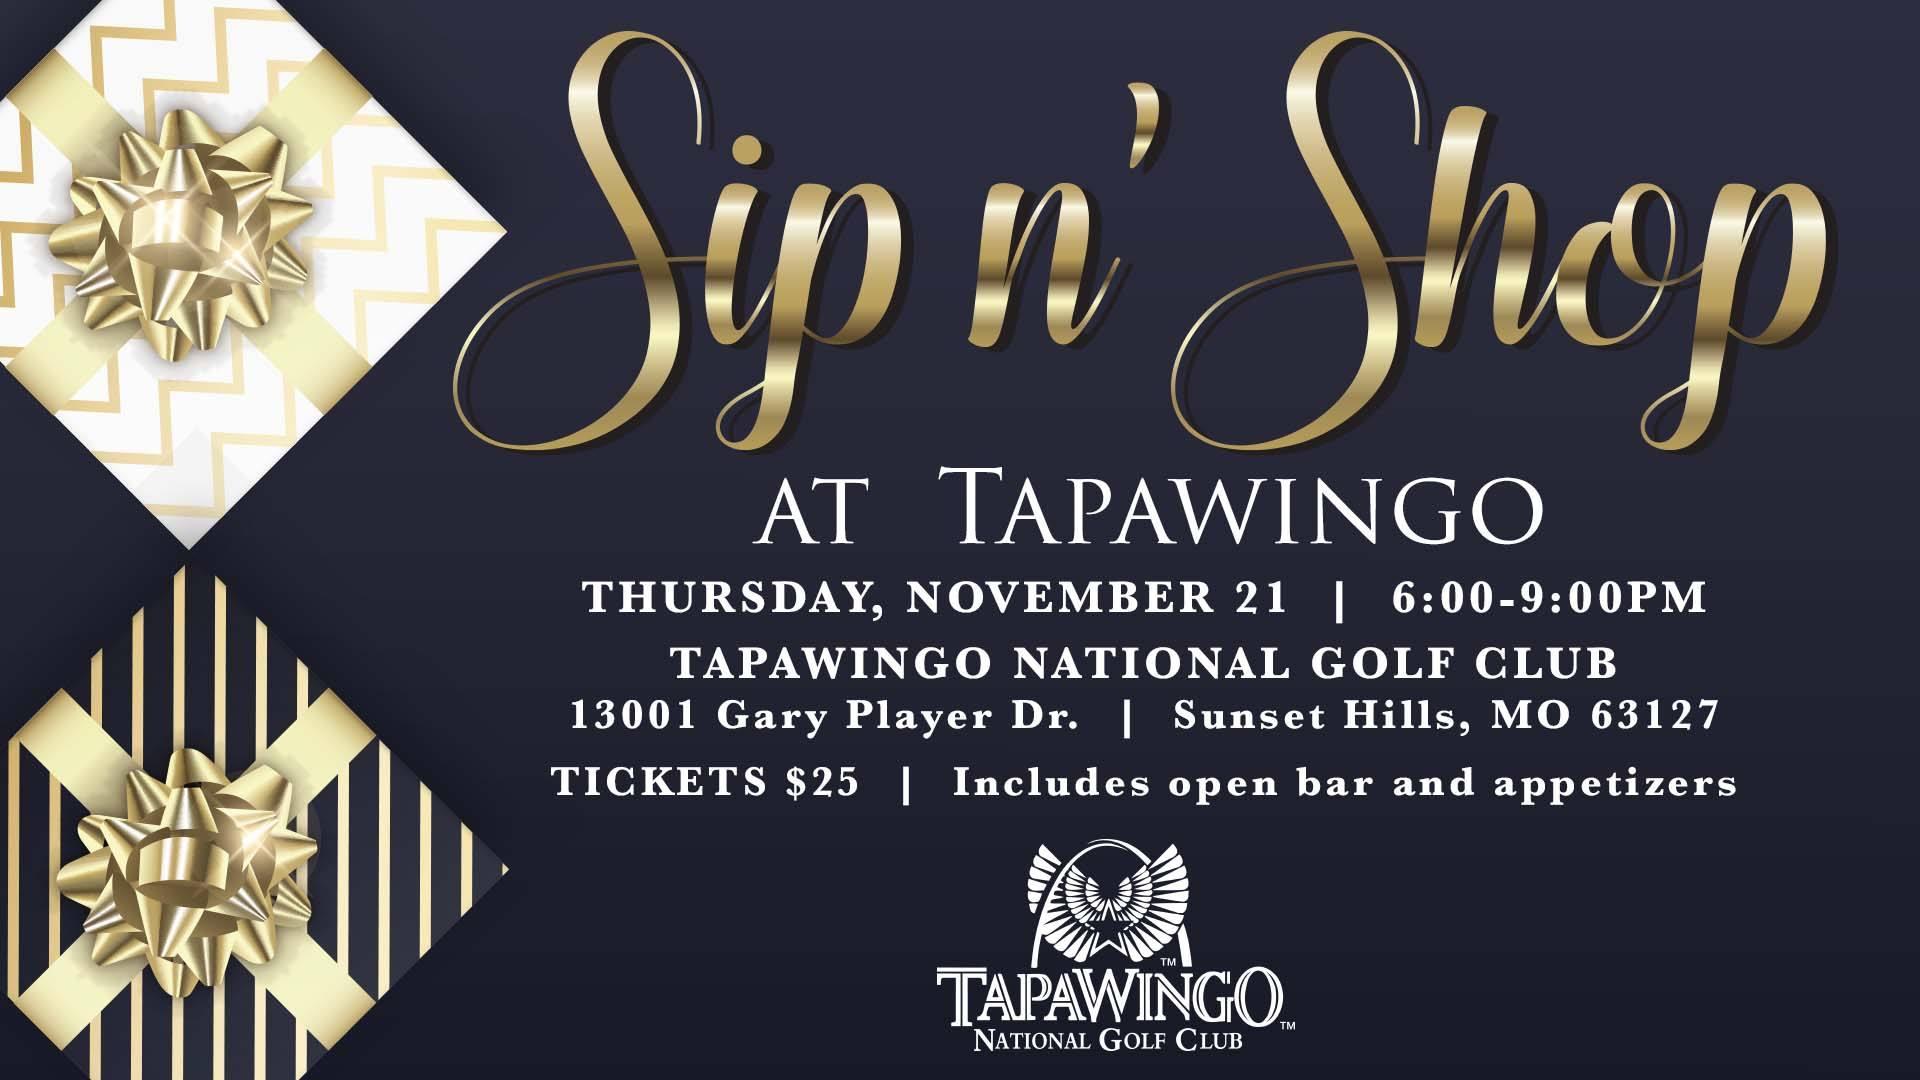 Sip n' Shop at Tapawingo National Golf Club